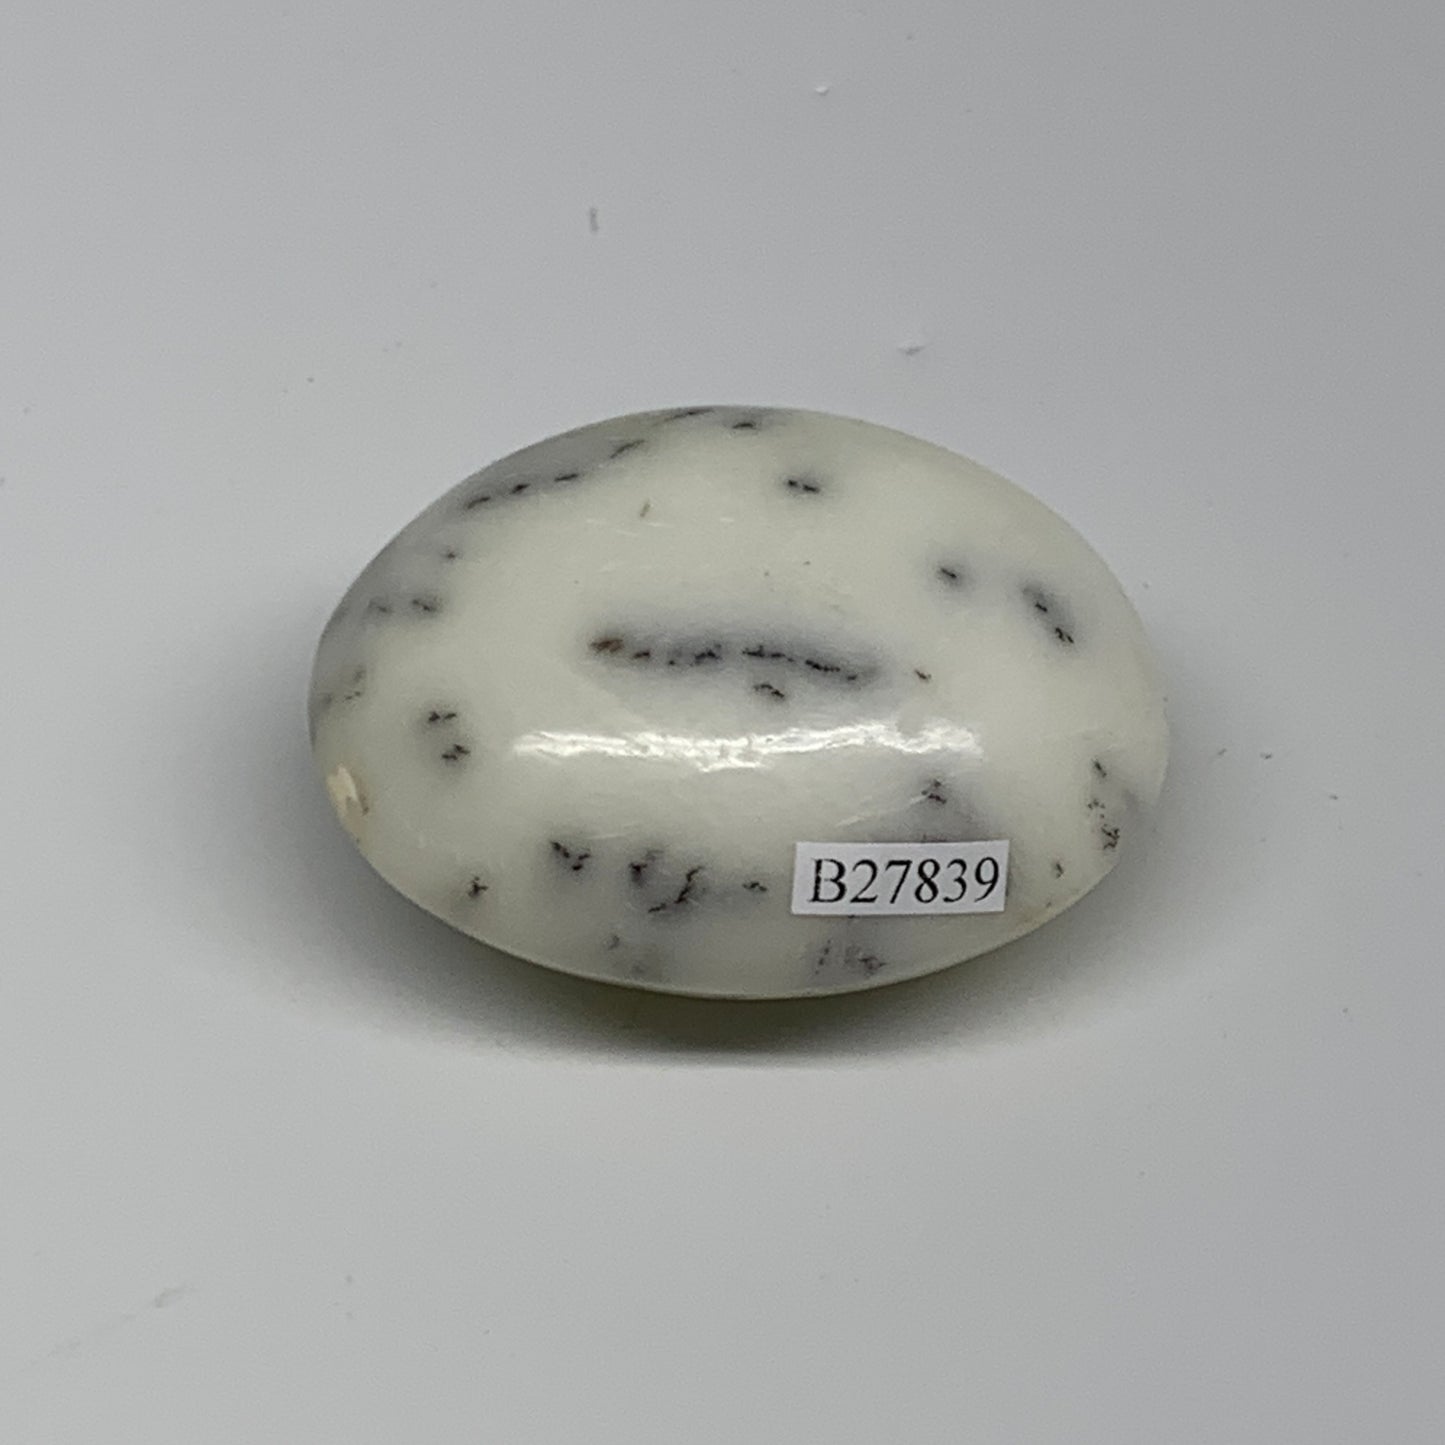 92.9g, 2.3"x1.8"x1.2", Dendrite Opal Palm-Stone Reiki Energy Crystal, B27839